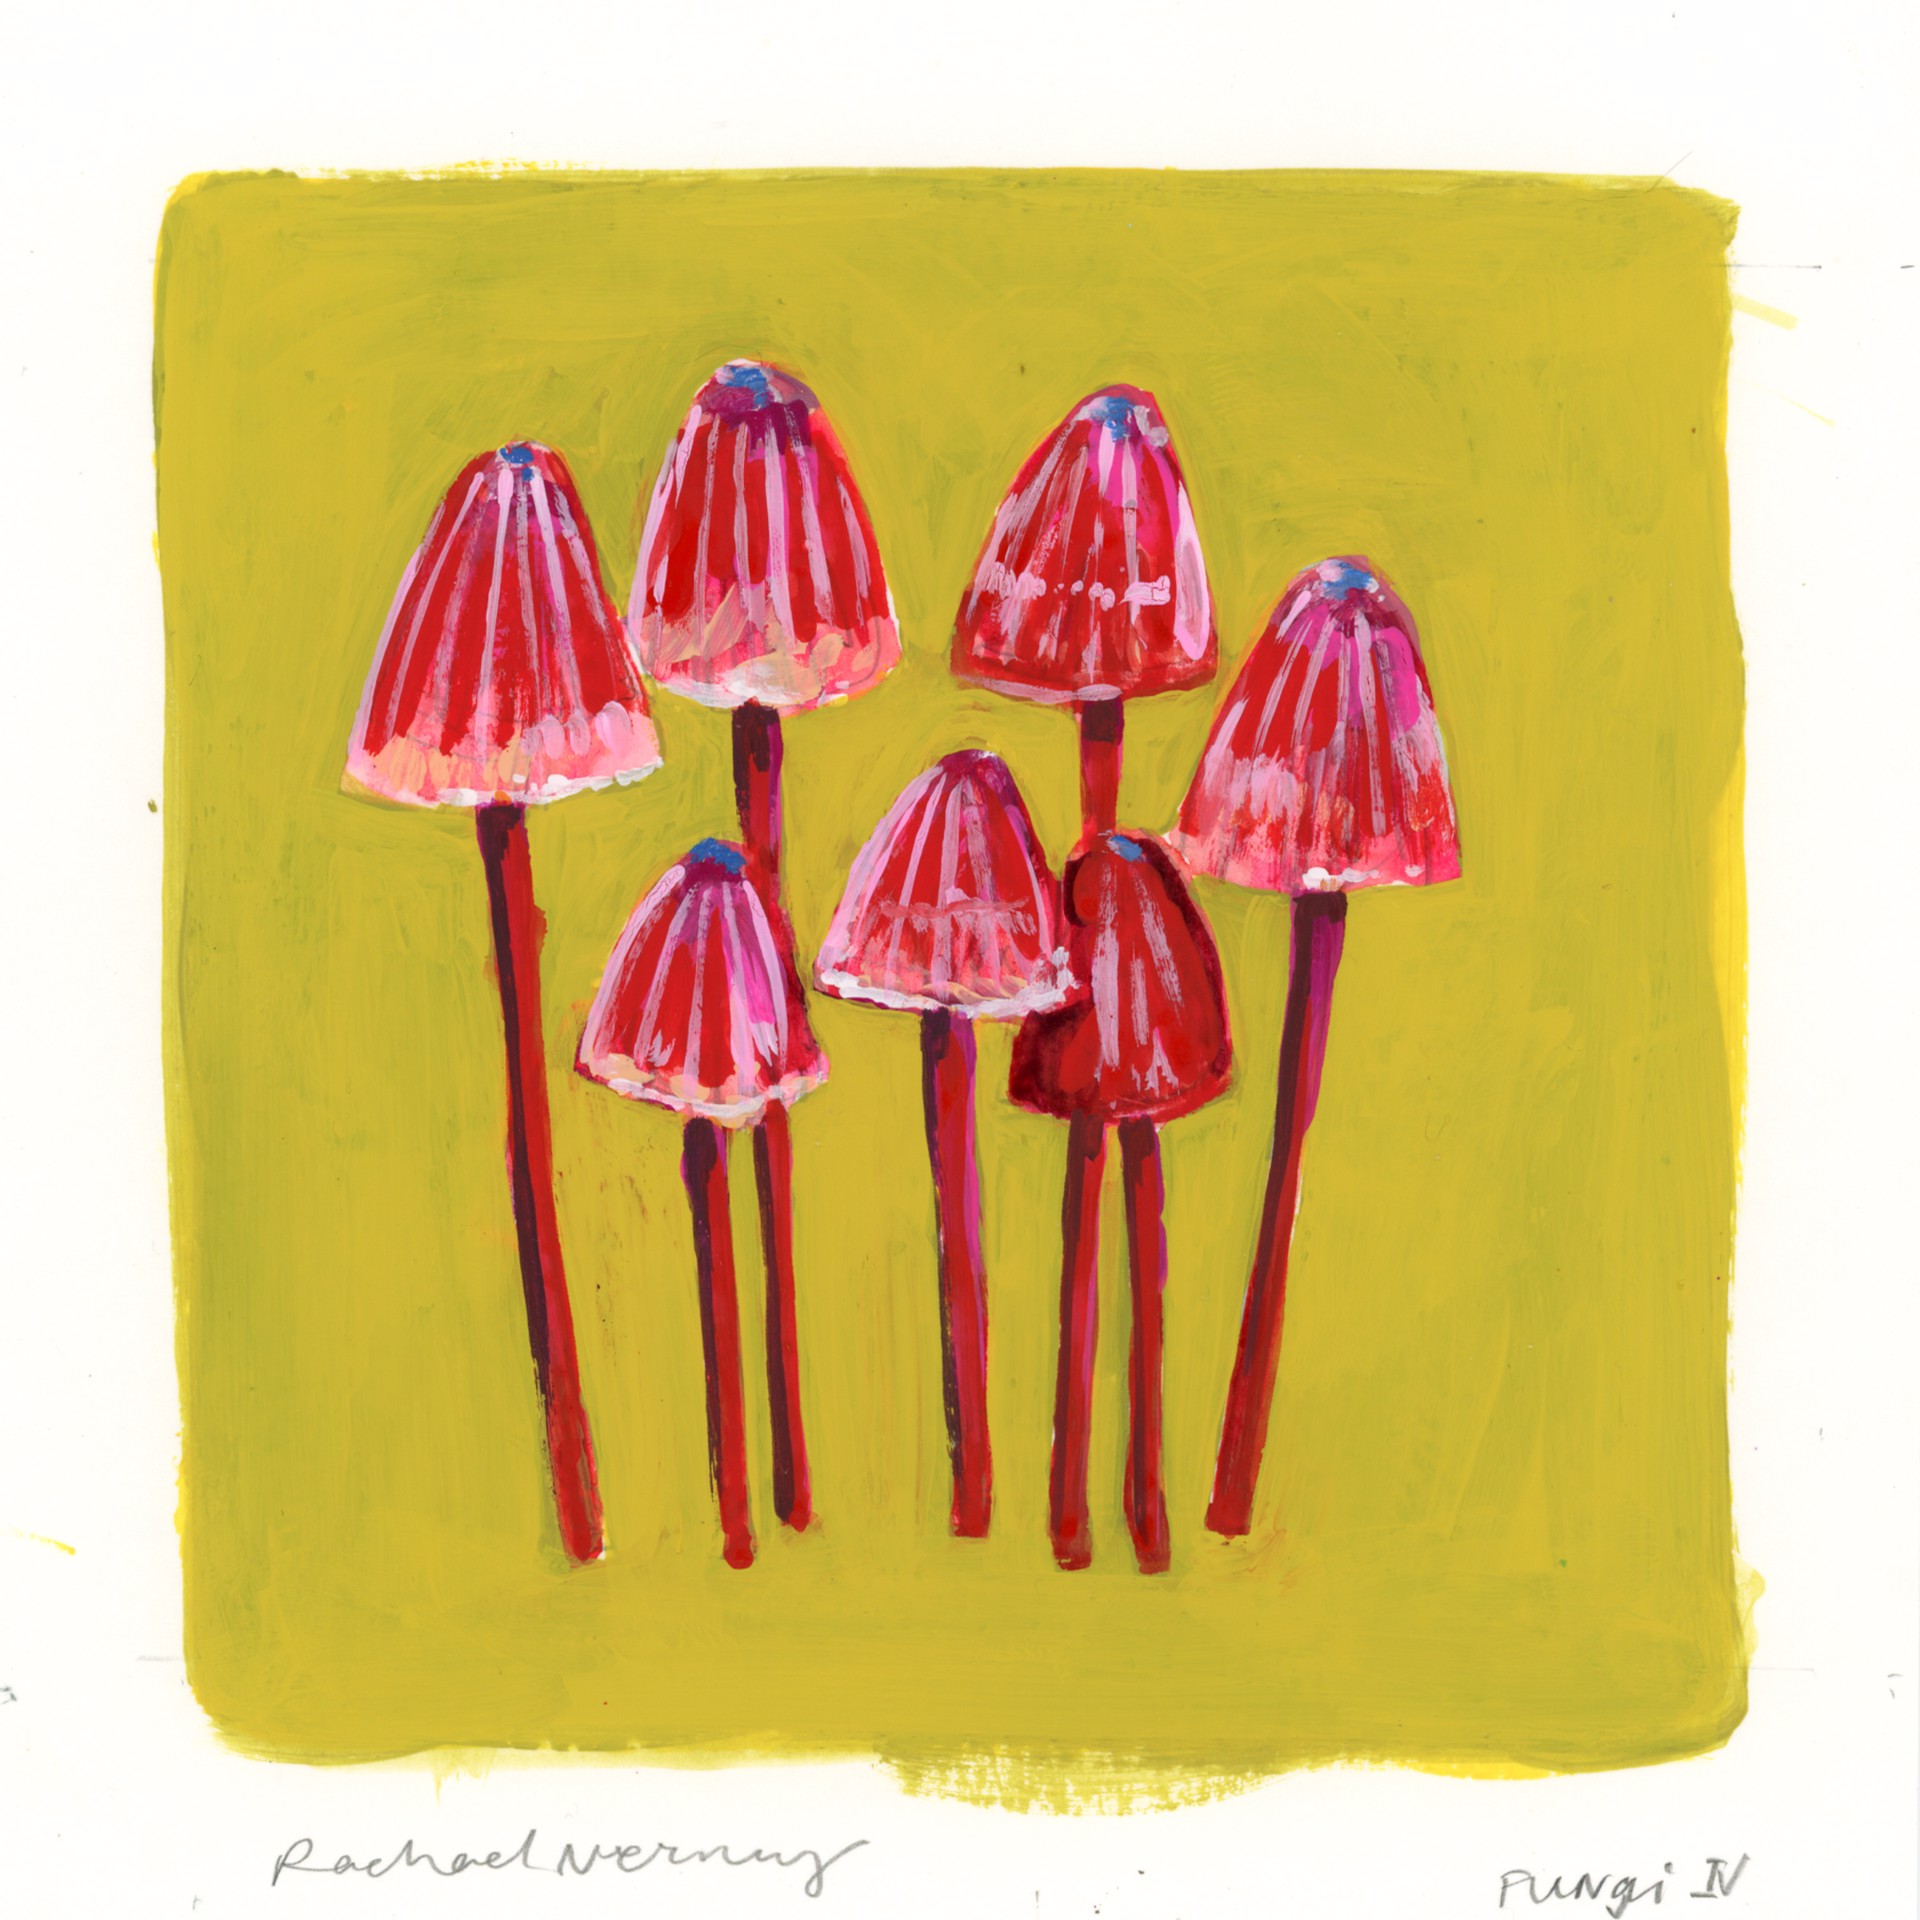 Fungi IV by Rachael Nerney